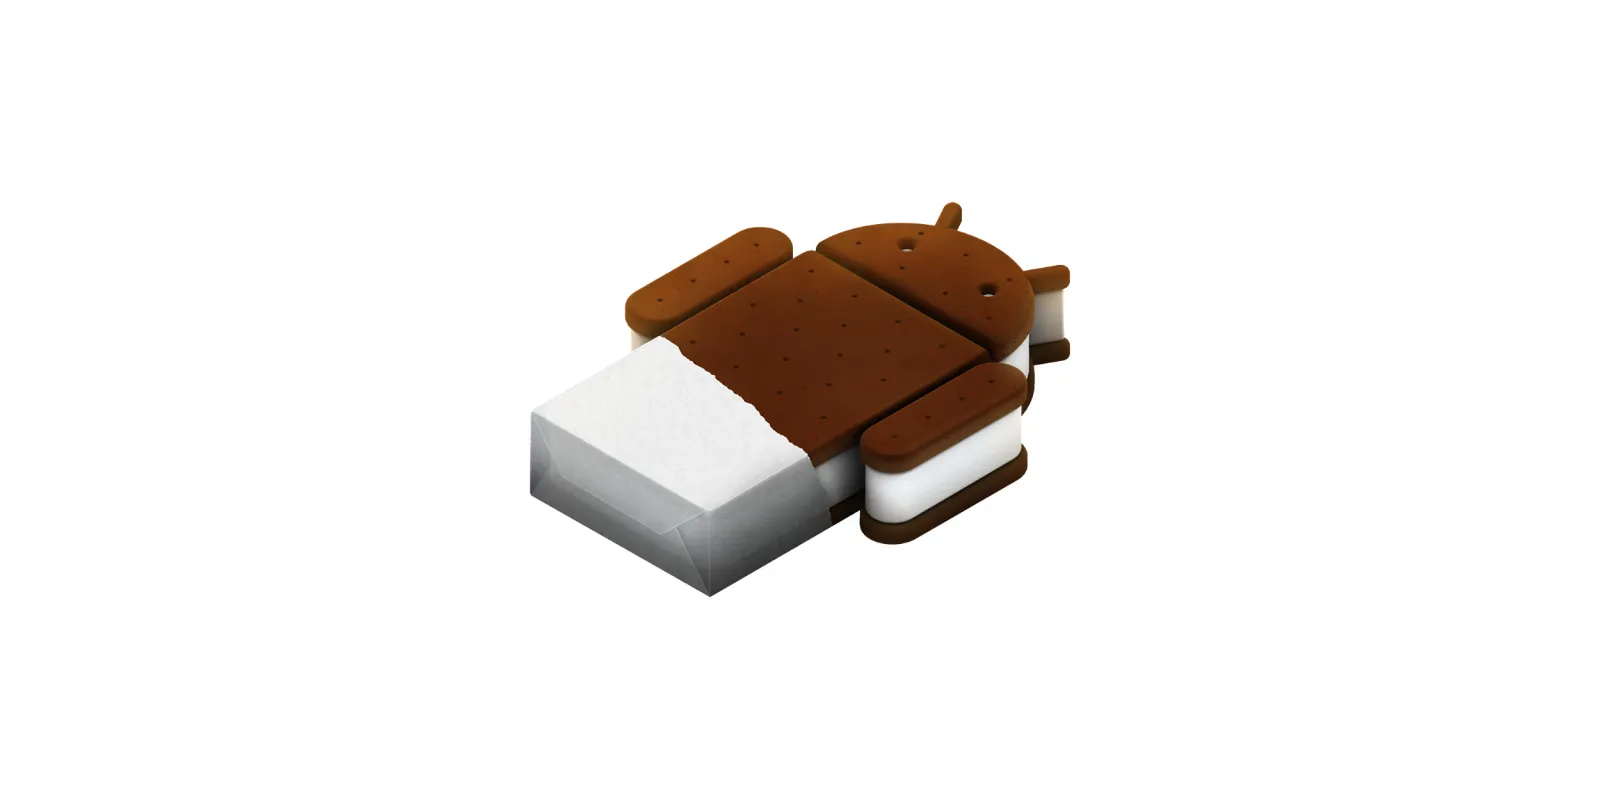 Galaxy Nexus Android mobile technology platform 4.0